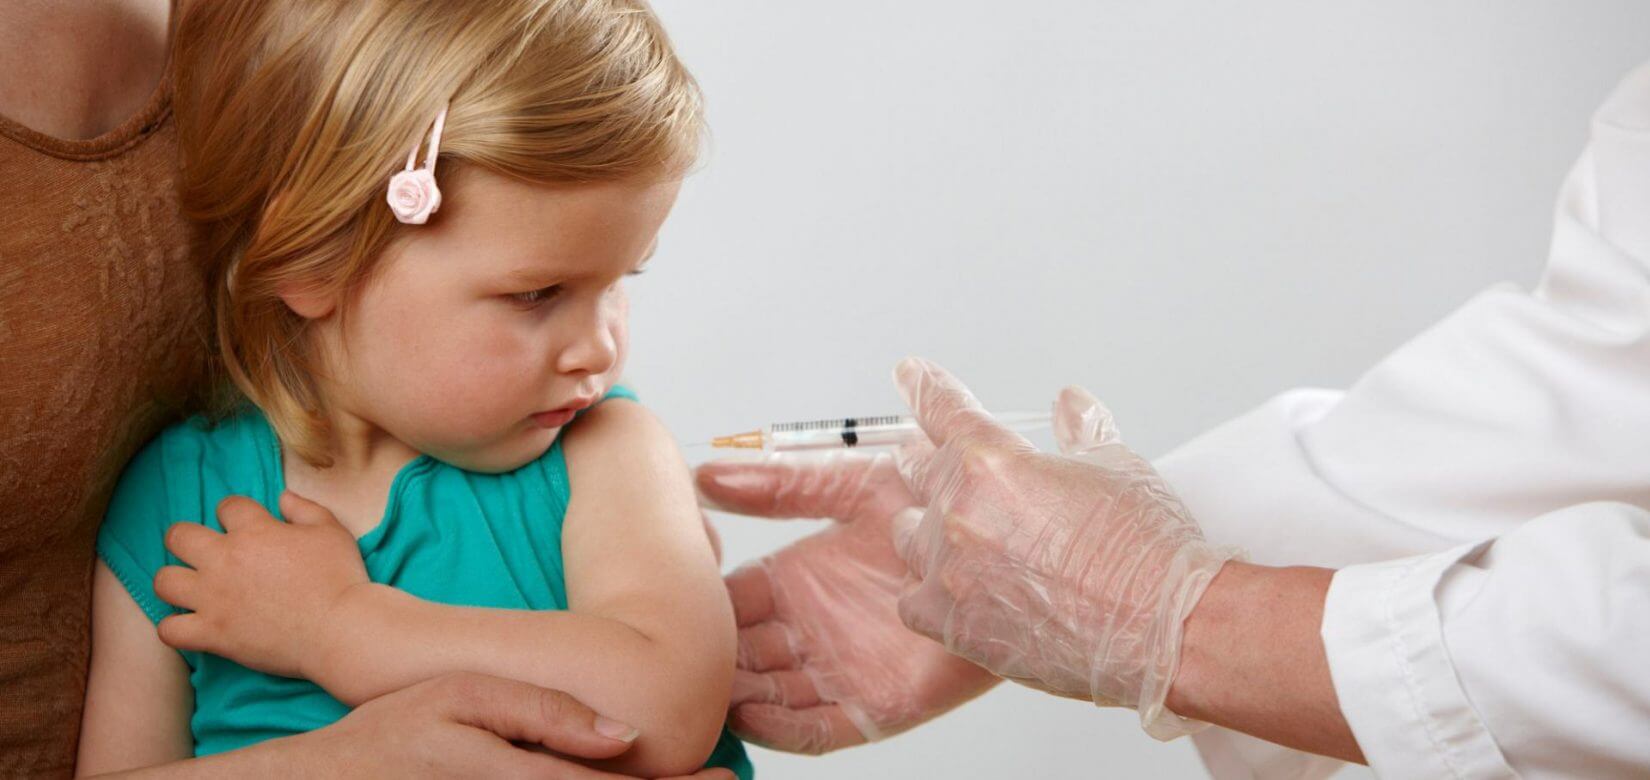 Xάνονται εκατομμύρια παιδικά εμβόλια  λόγω πανδημίας - Οι κίνδυνοι είναι μεγάλοι